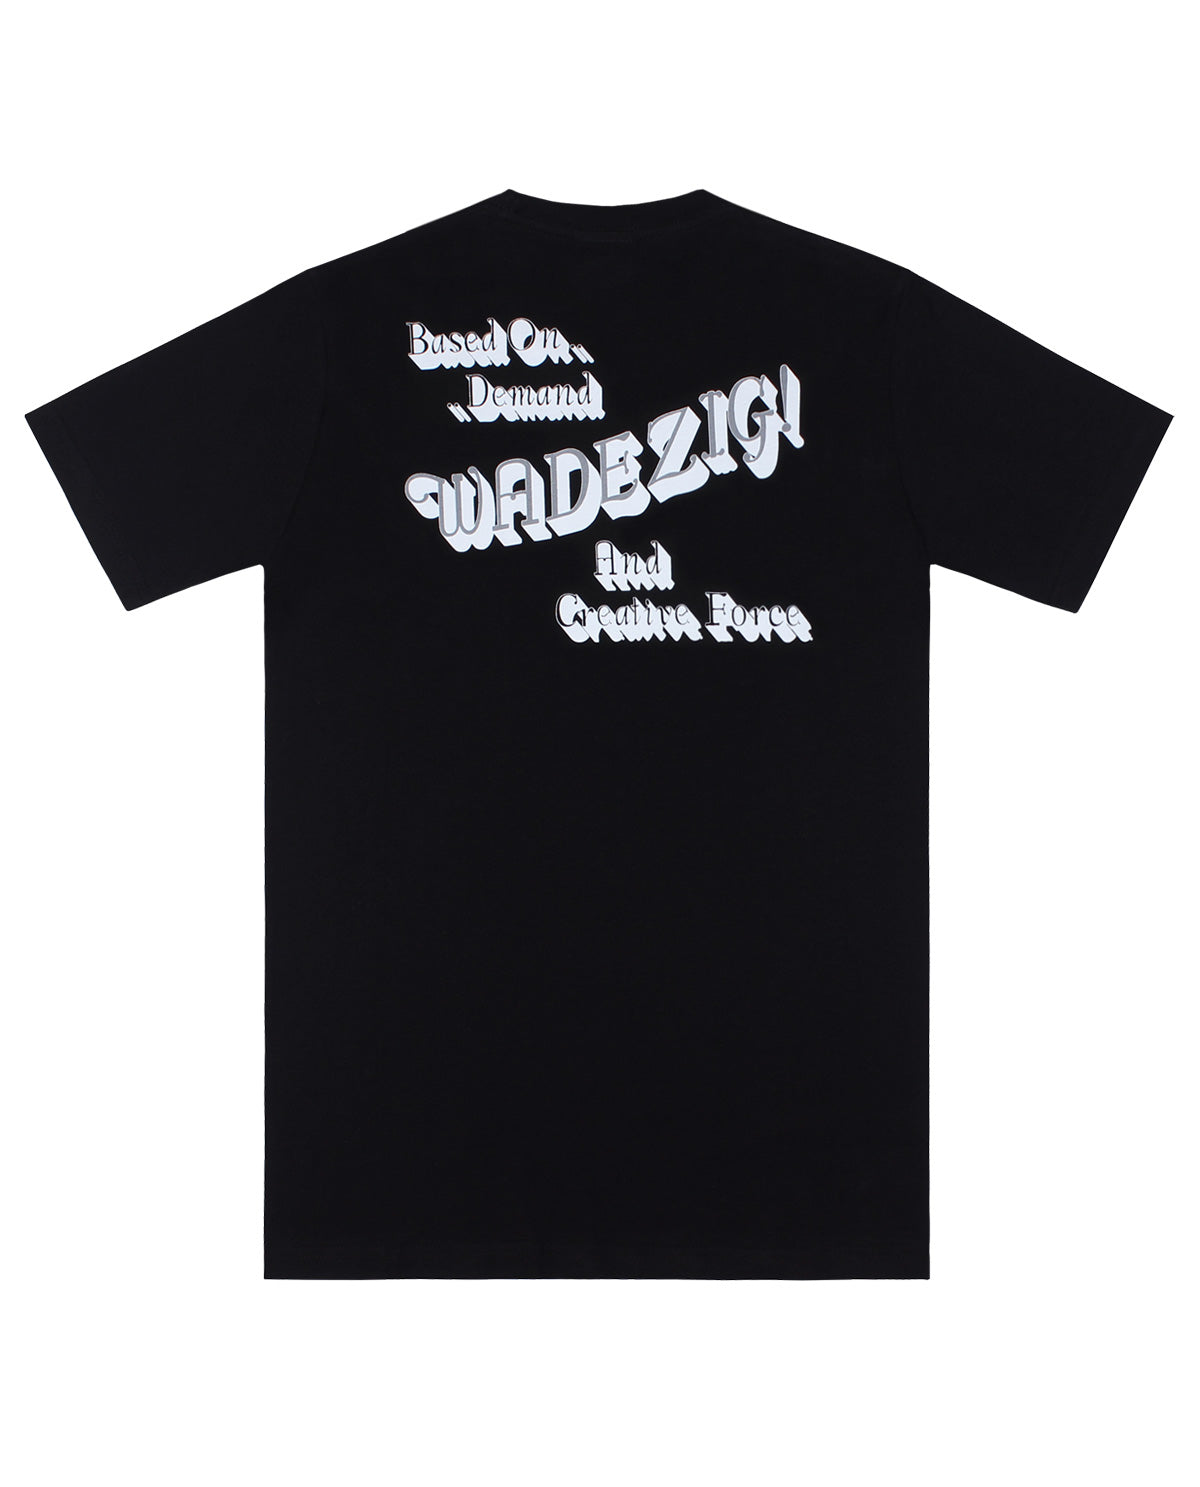 Wadezig! T-Shirt - Demand Black